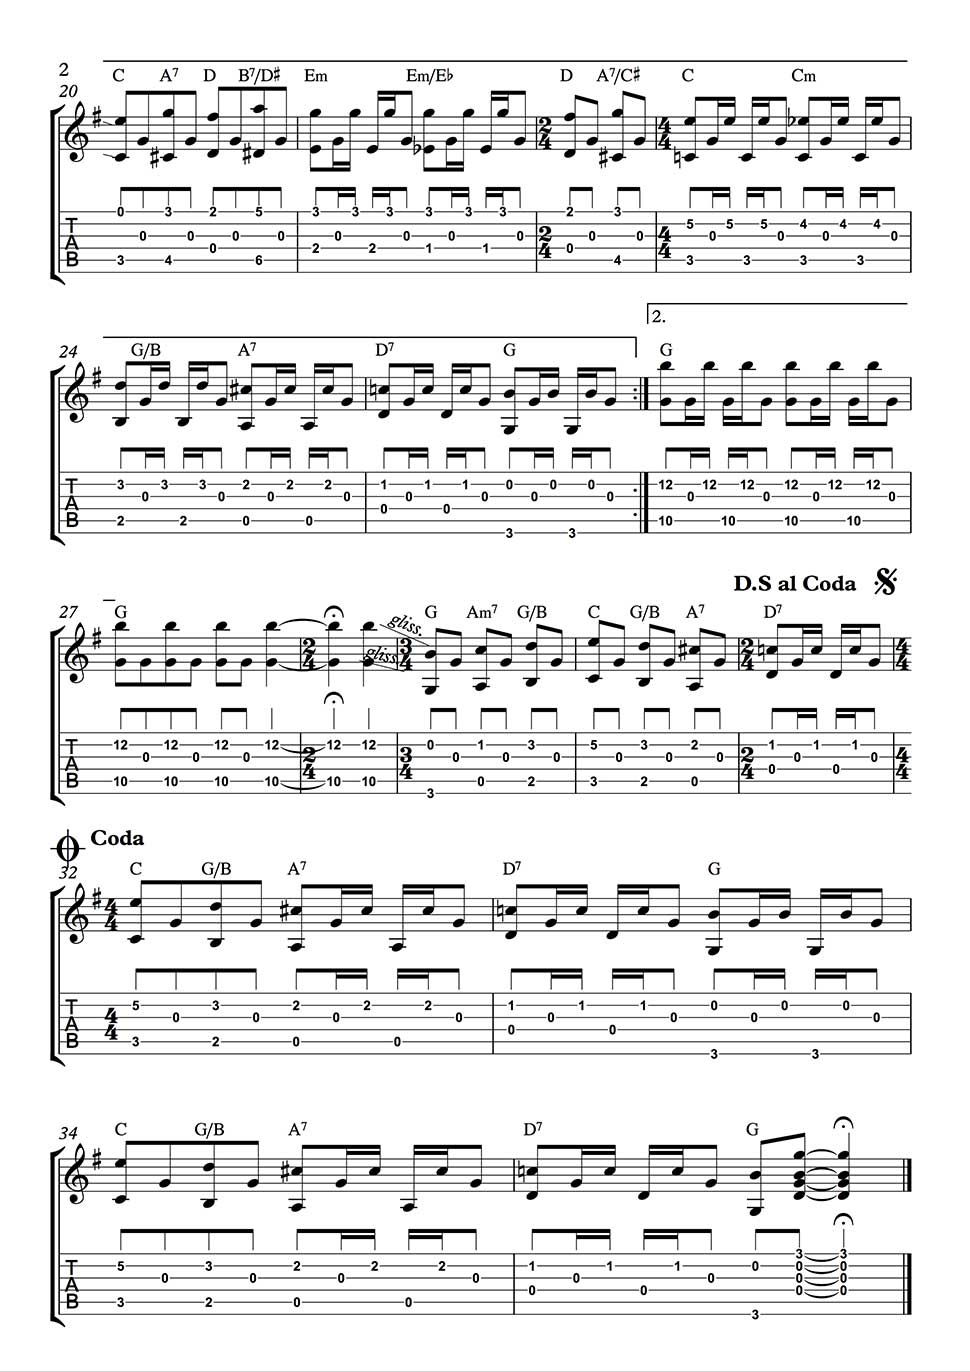 Más sueño Evaporar Blackbird" Guitar part as played by Beatles in Tab and Notation.